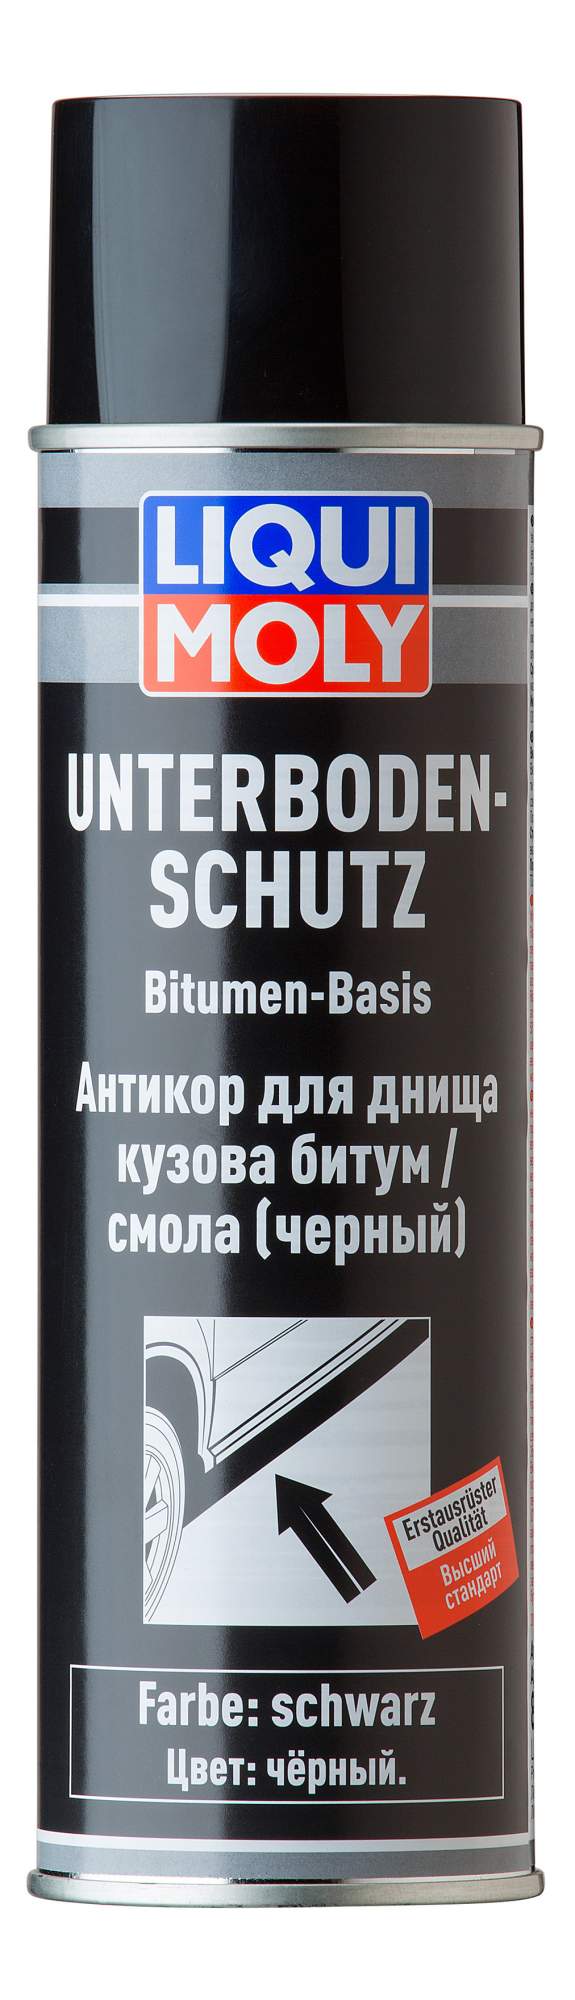 8056 LIQUI MOLY Антикор д/днища кузова битум/смола (черн,) Unterb,-Schutz (0,5л)